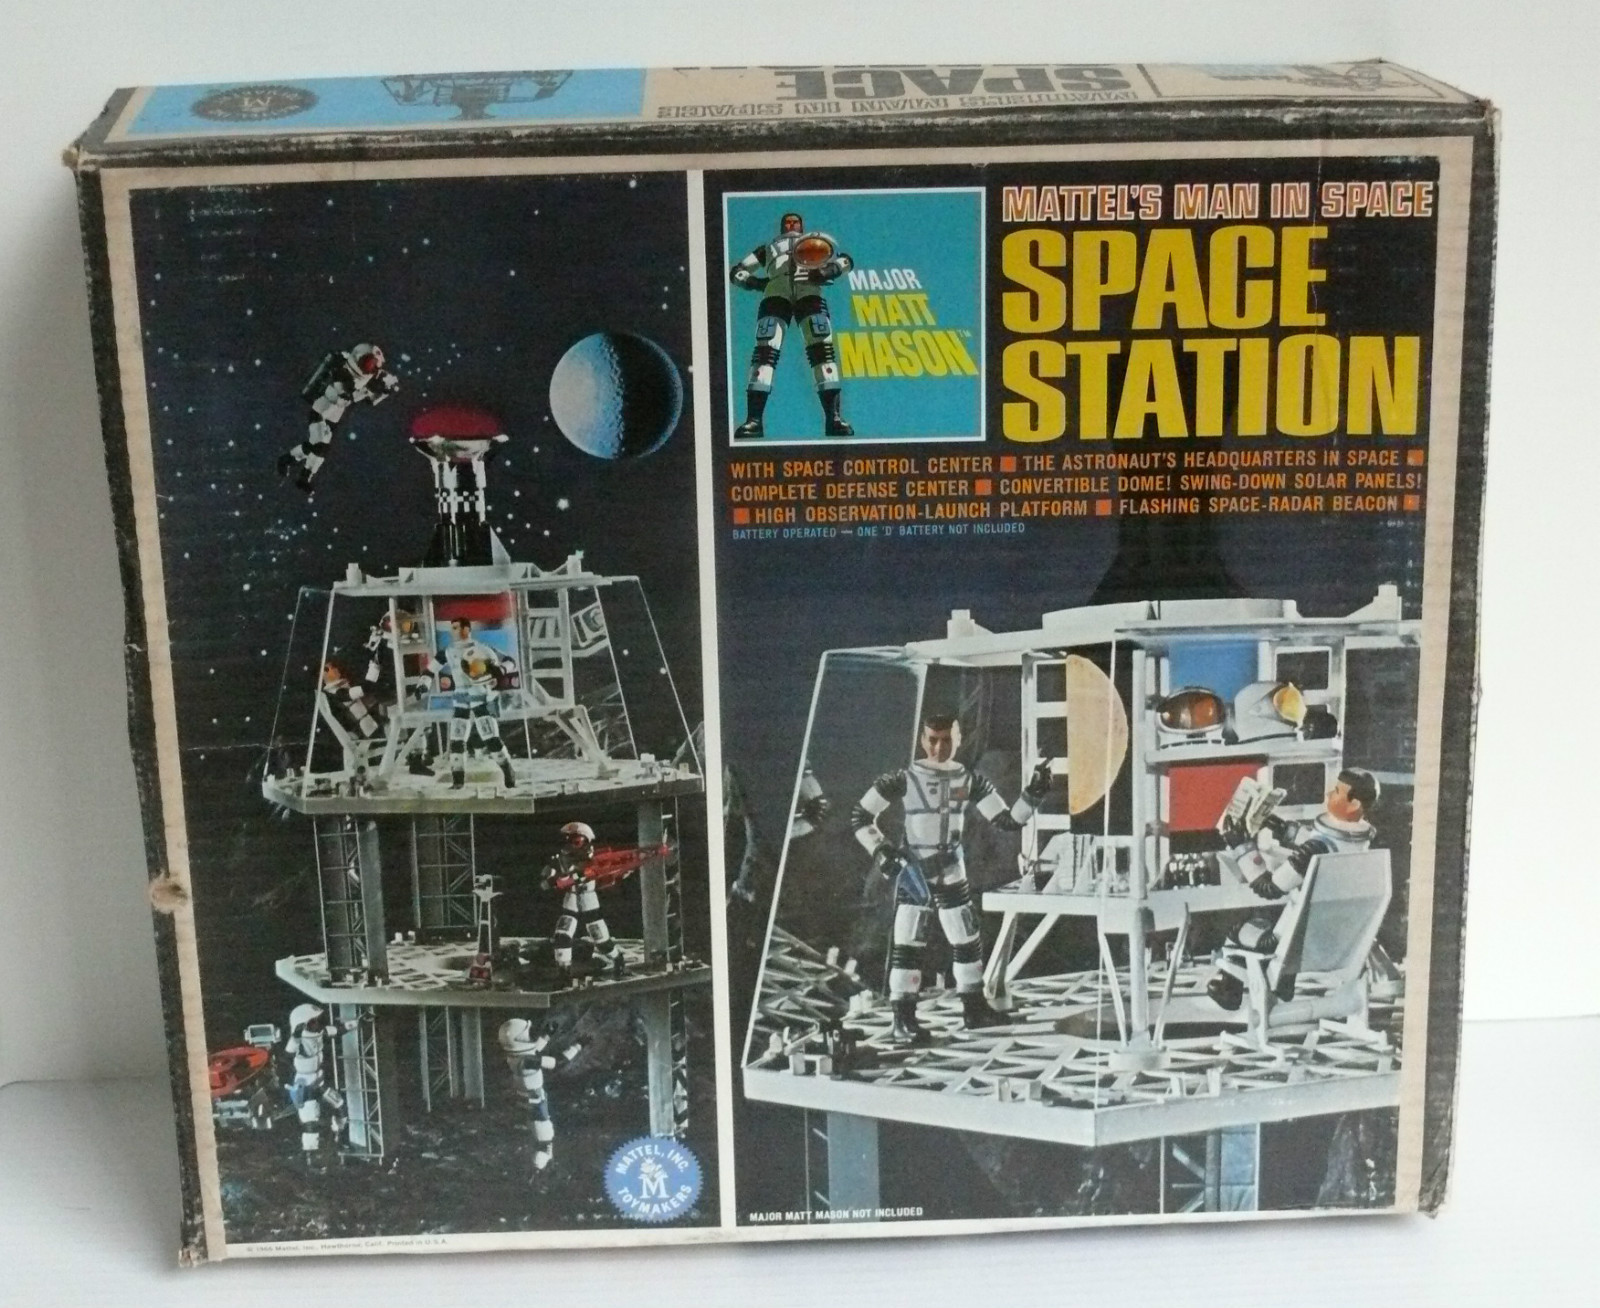 VINTAGE COPY 1966 MATTEL MAJOR MATT MASON SPACE TOYS COMIC BOOK ADVERTISEMENT 